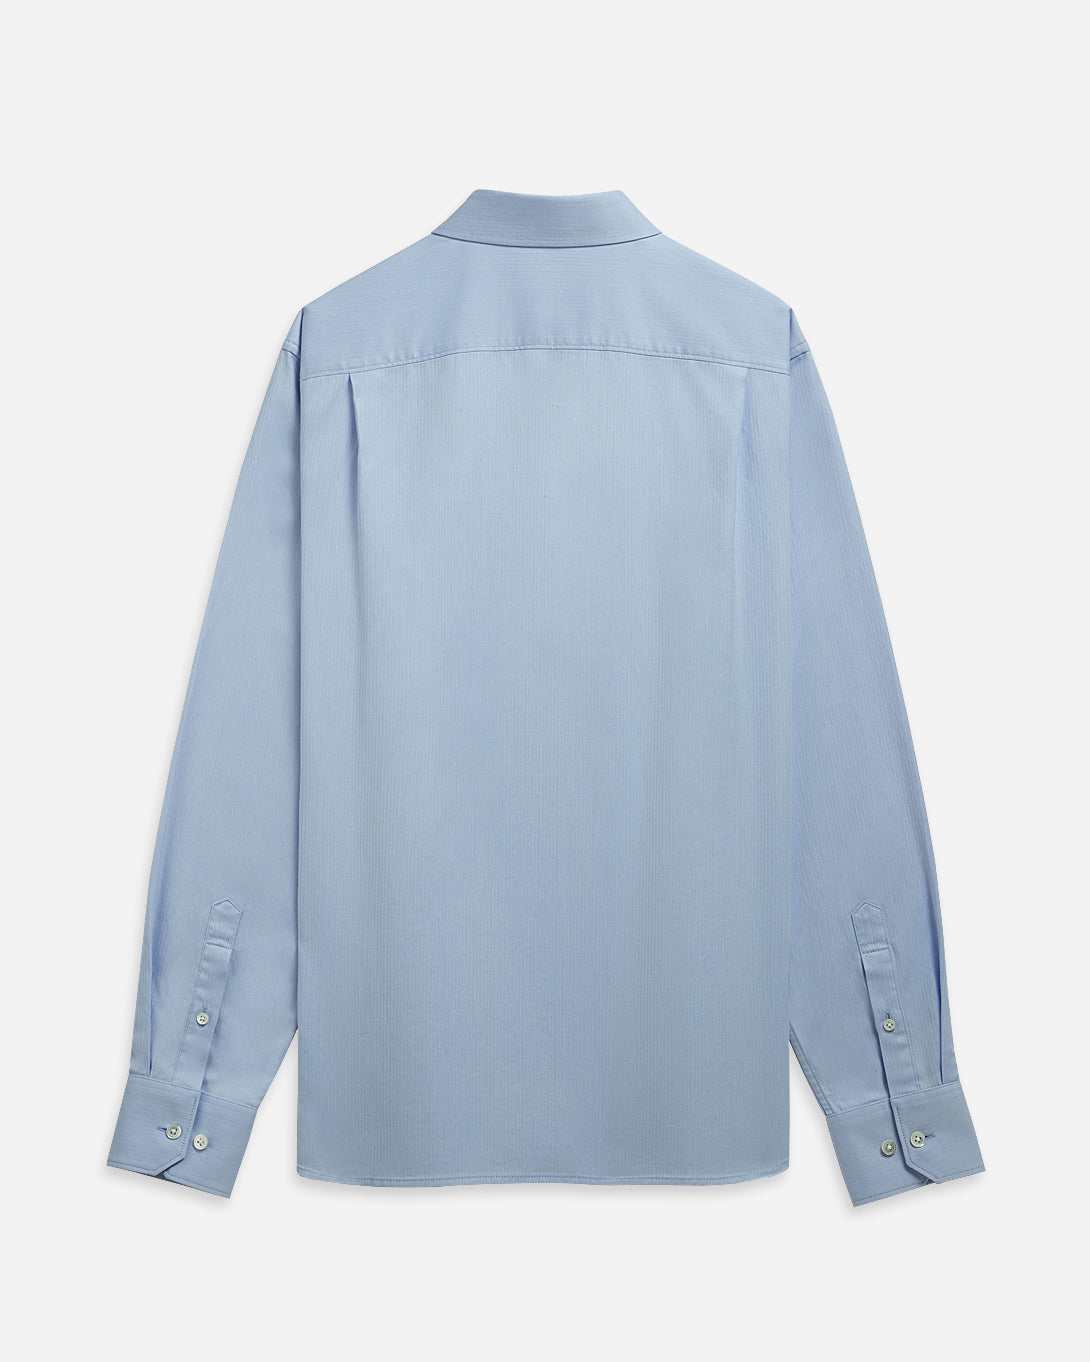 LAVENDER BLUE Adrian Herringbone Shirt Button Up Point Collar